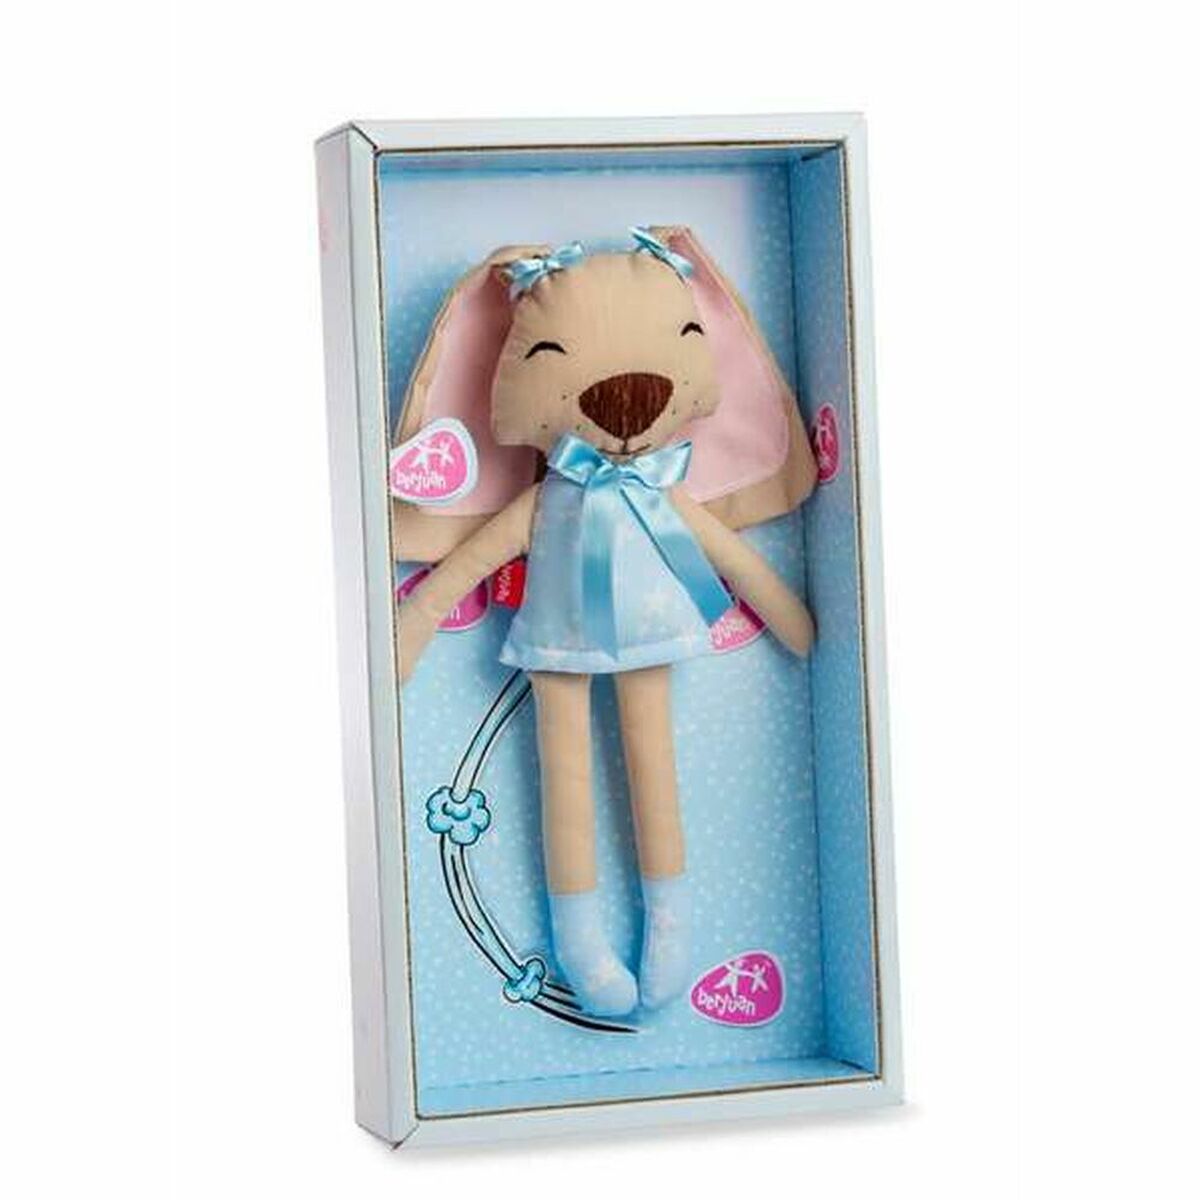 Rag Doll Berjuan 11200 Dog Blue - Little Baby Shop